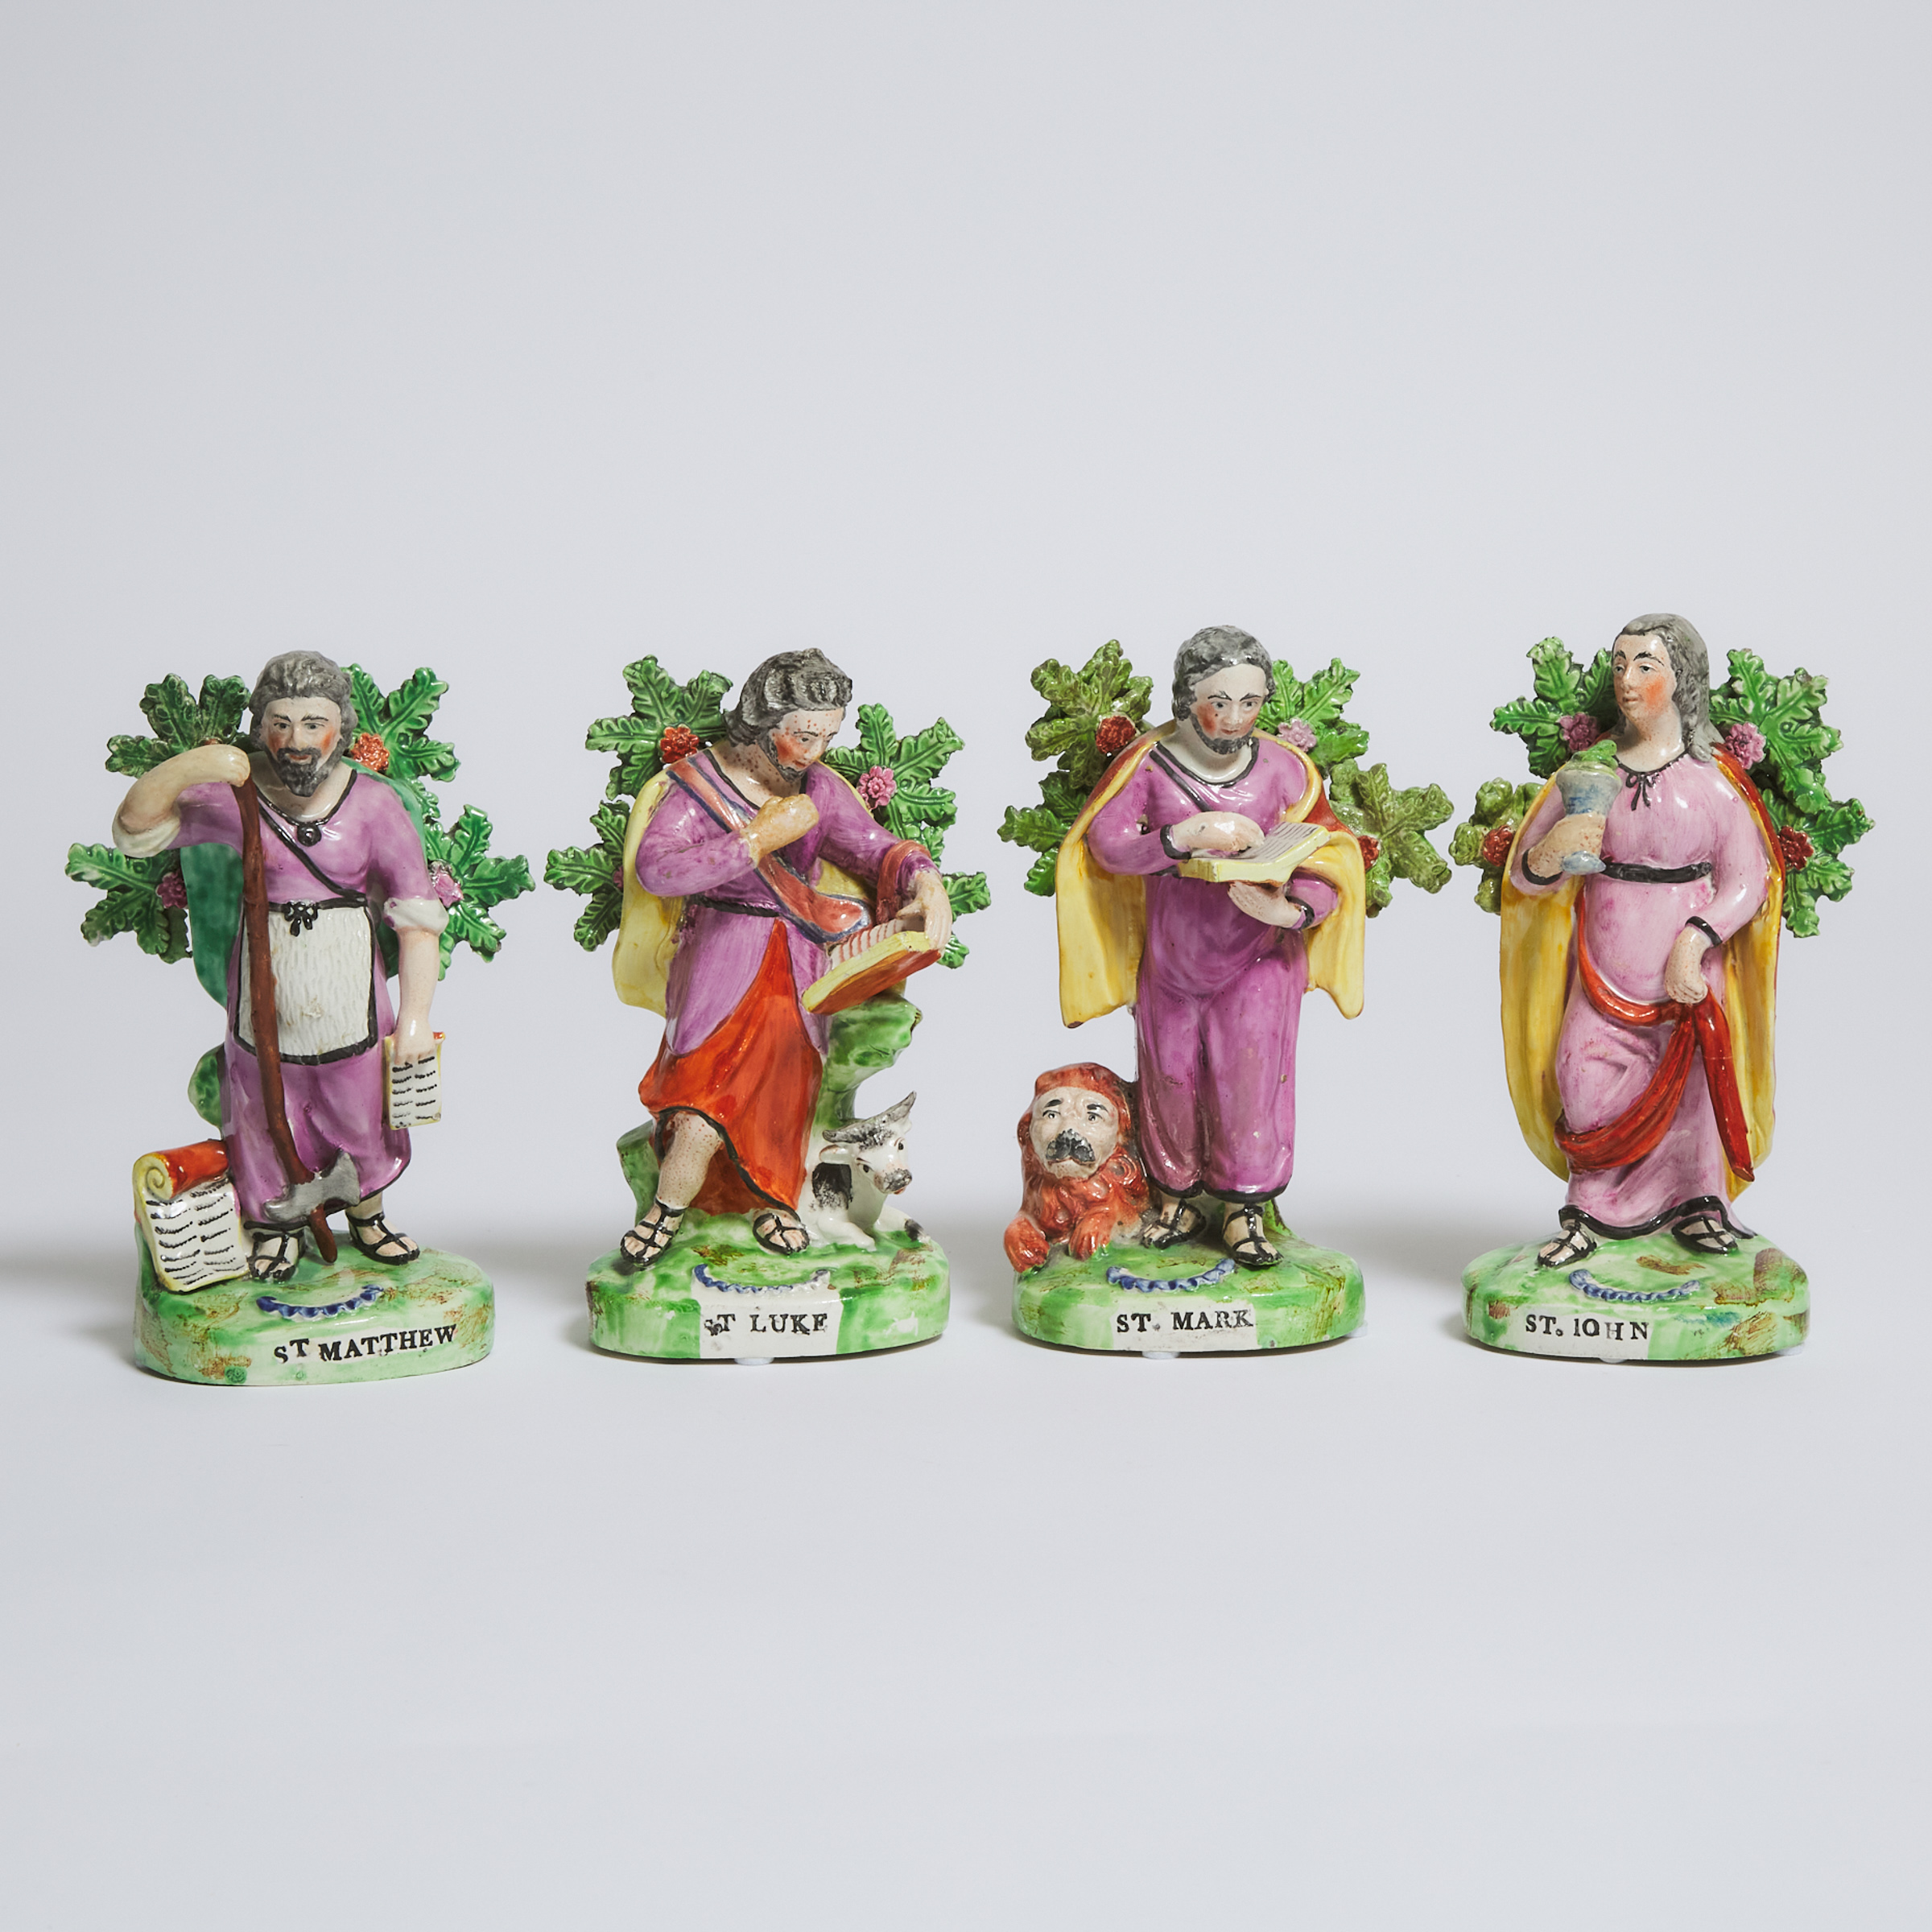 Set of Four Staffordshire Pearlware Figures of the Evangelists, Matthew, Mark, Luke and John, c.1820